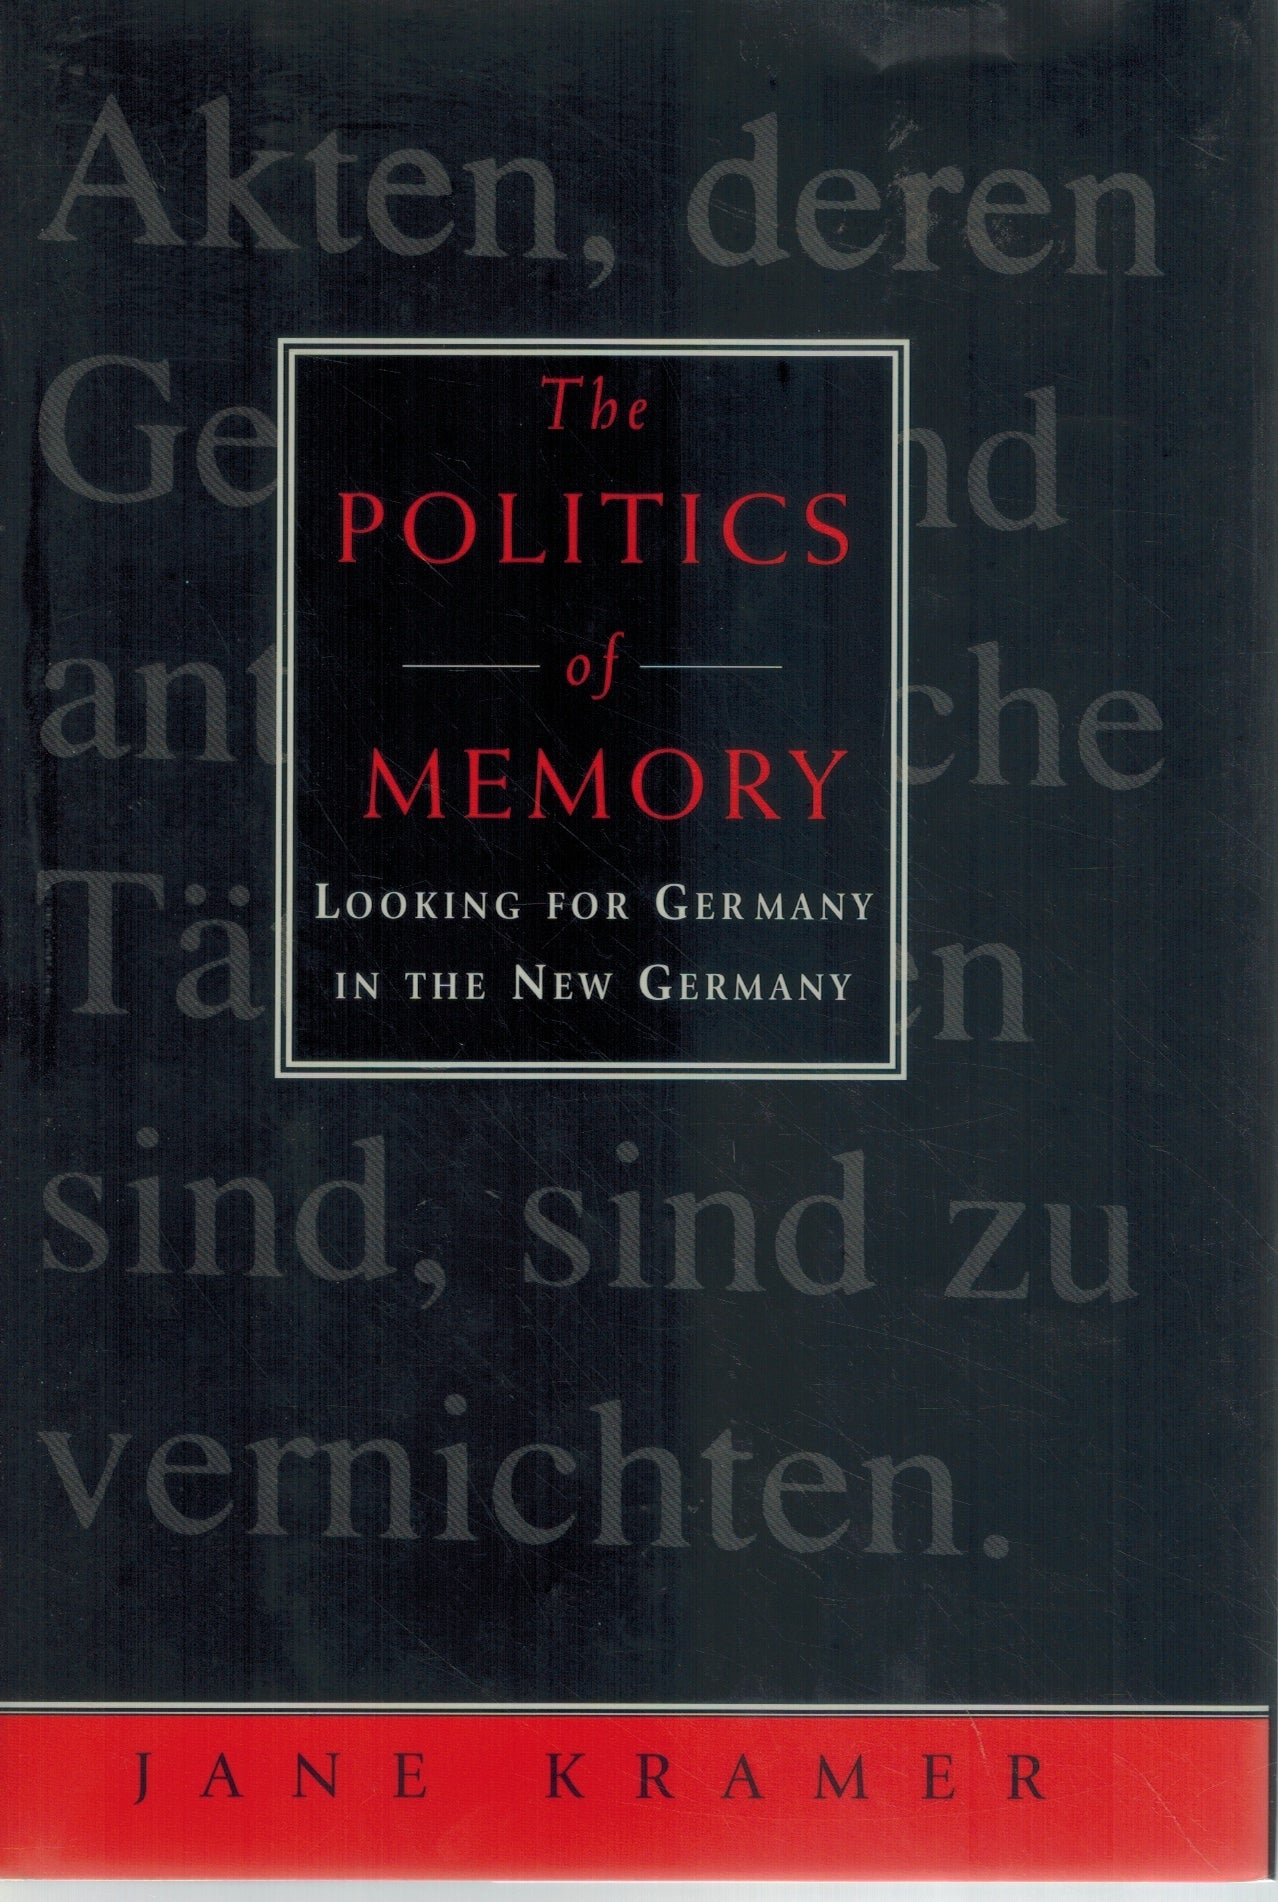 THE POLITICS OF MEMORY